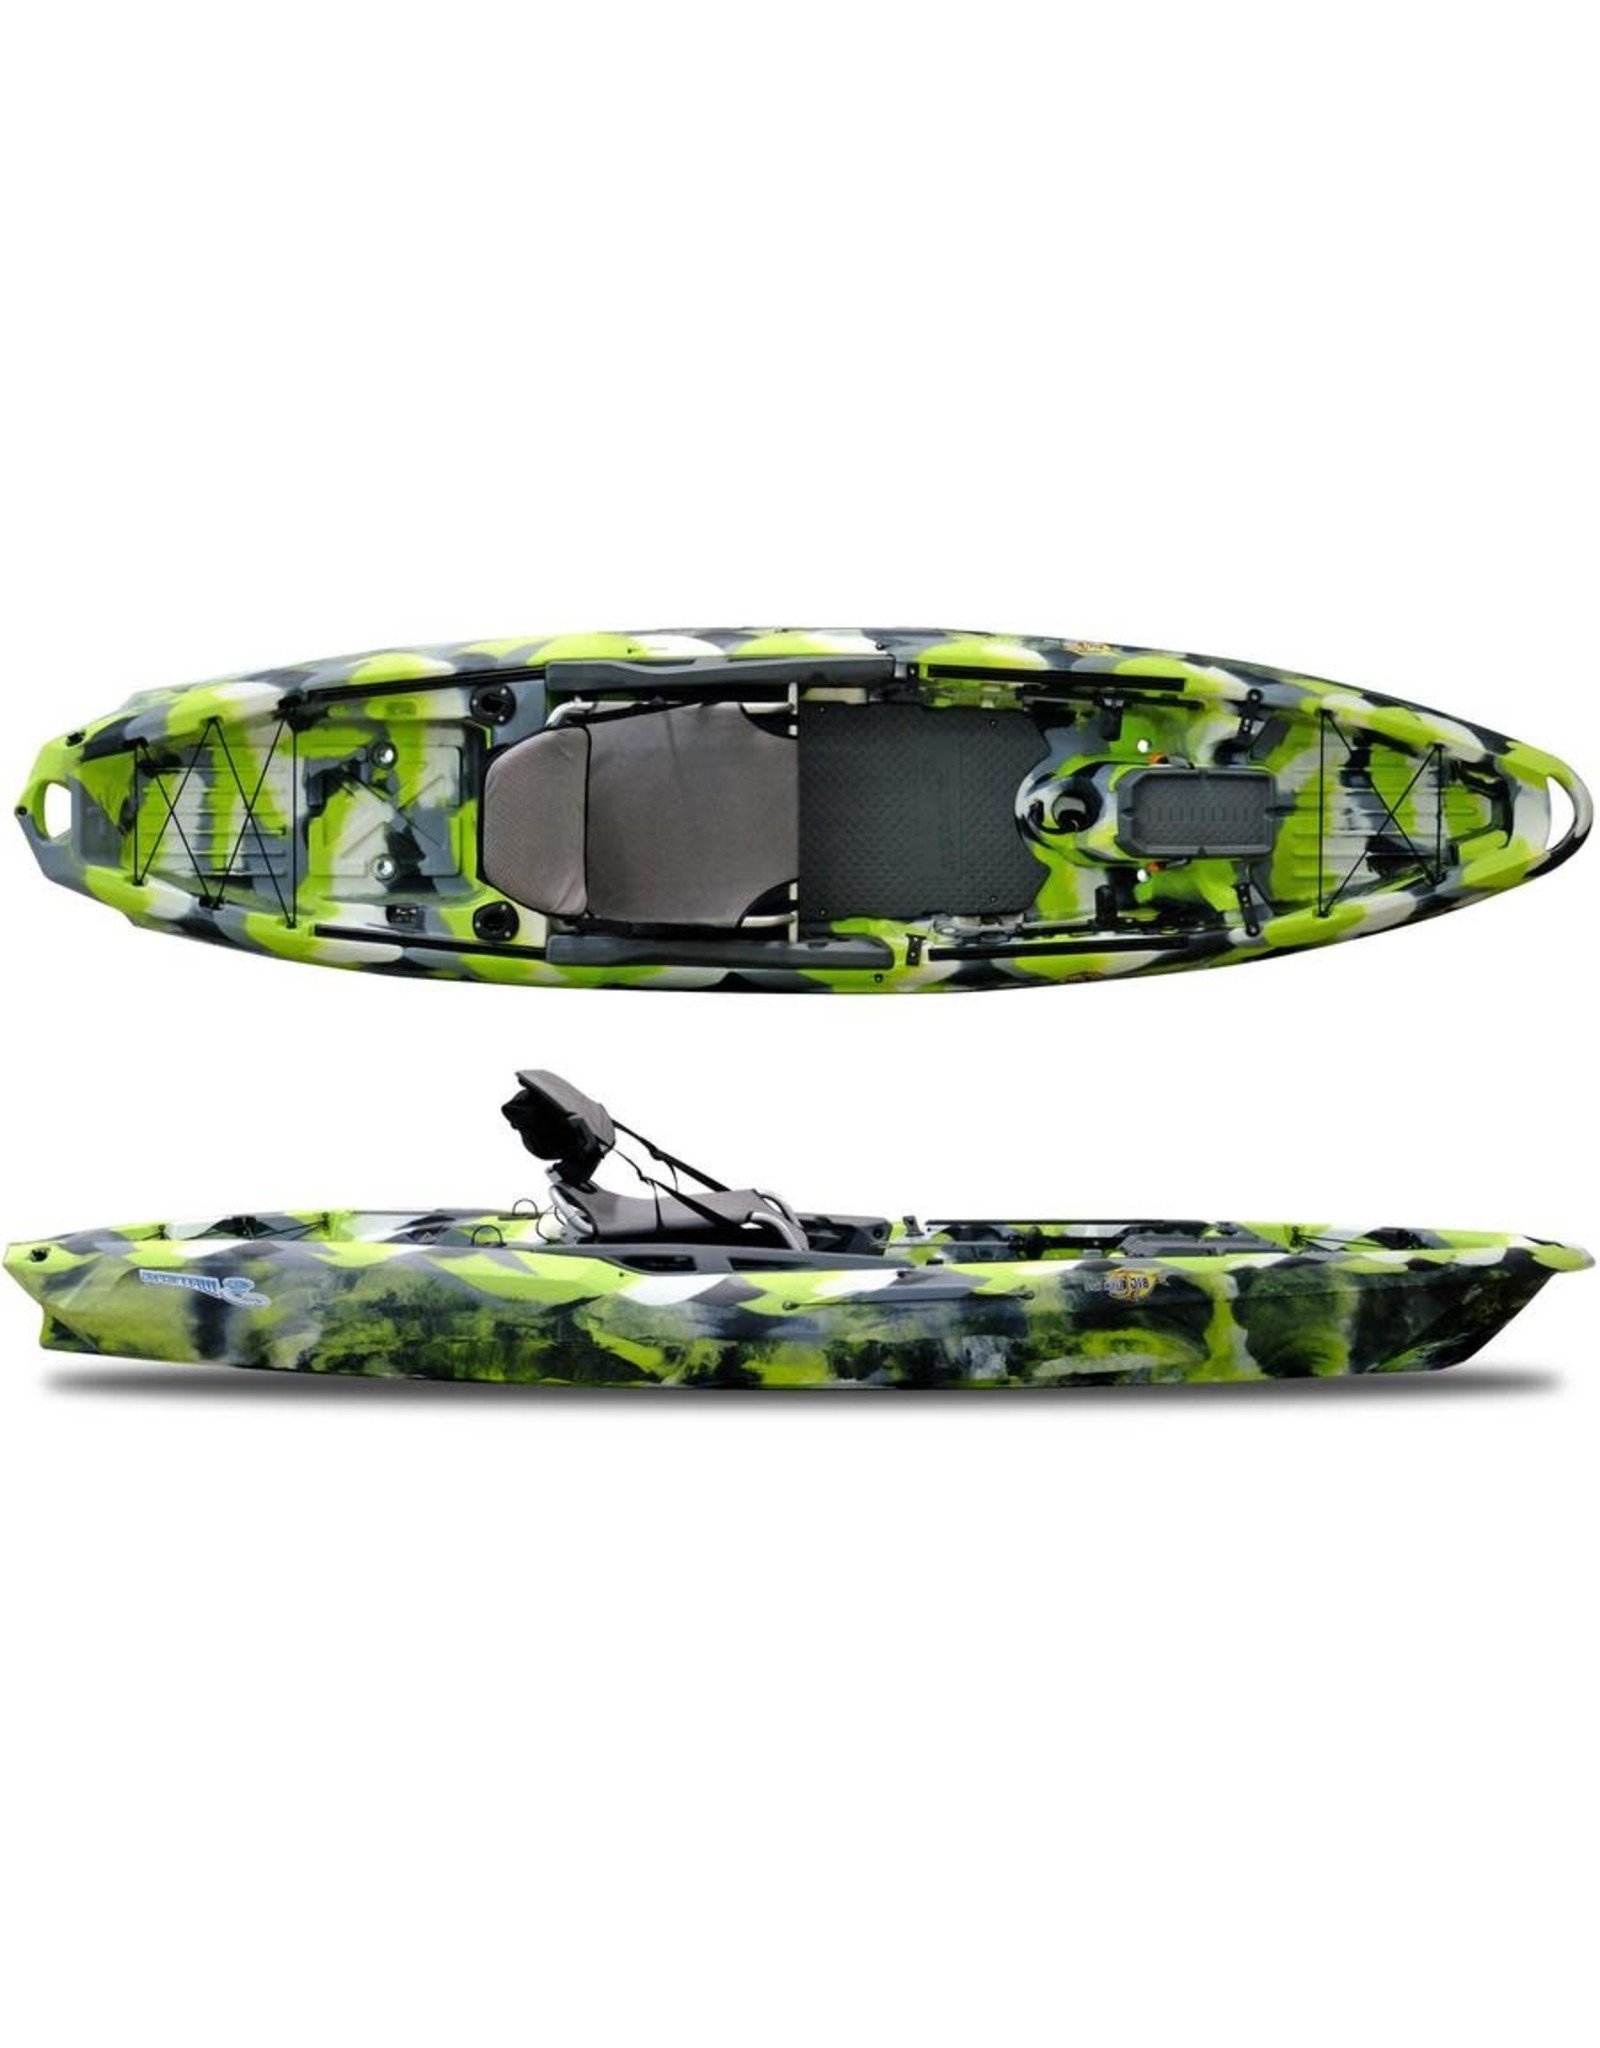 3 Waters Kayaks 3 Waters kayak Big Fish 120 Green/Camo